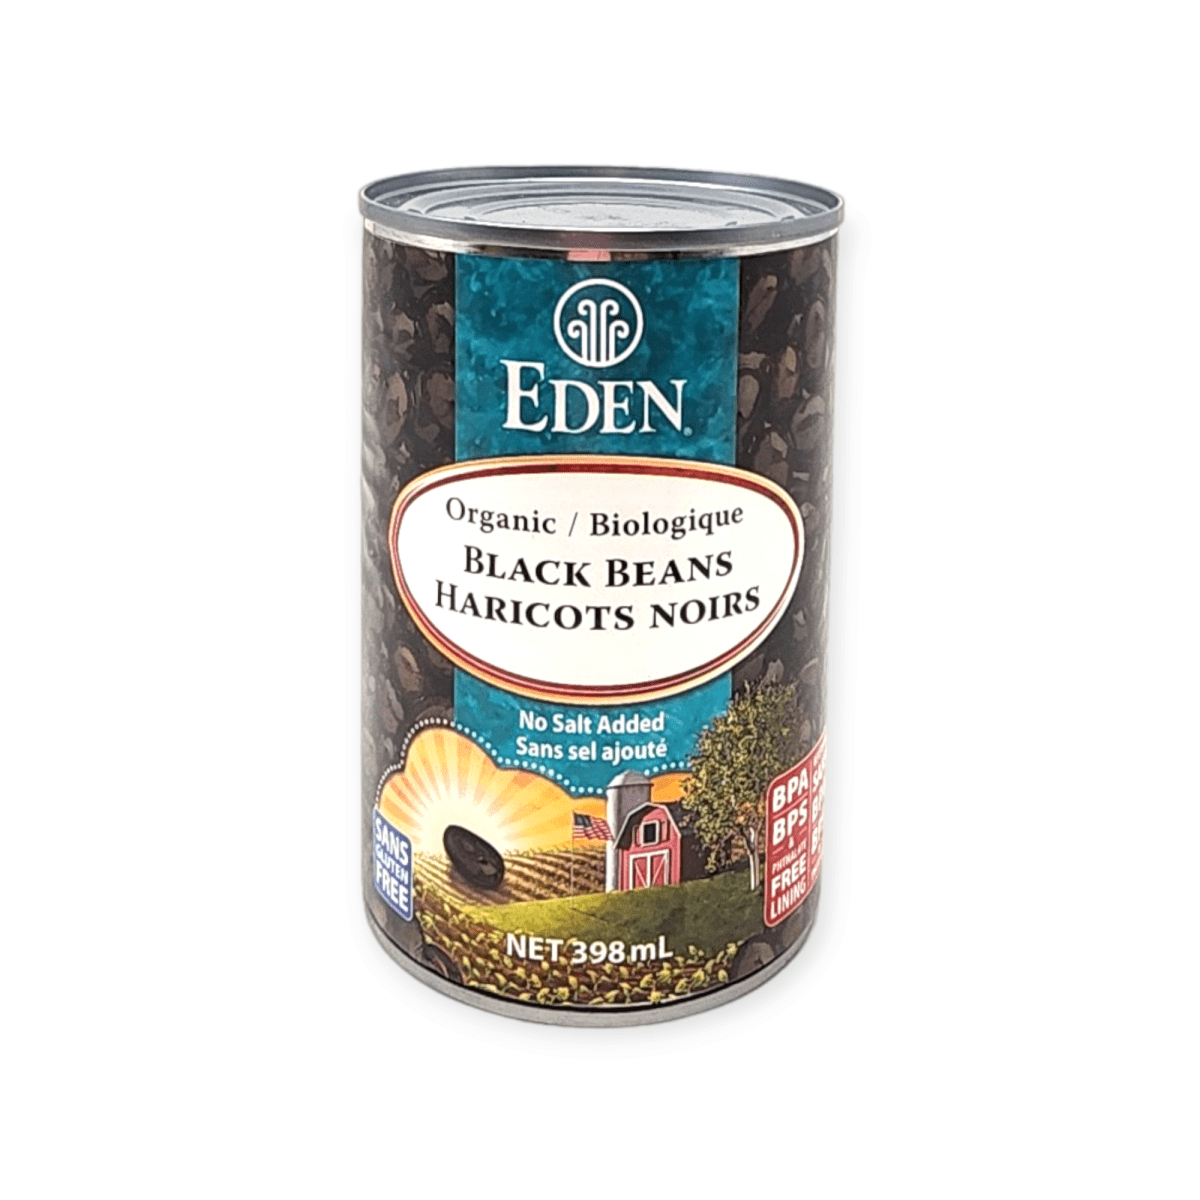 Eden Organic Black Beans No Salt Added (398mL)